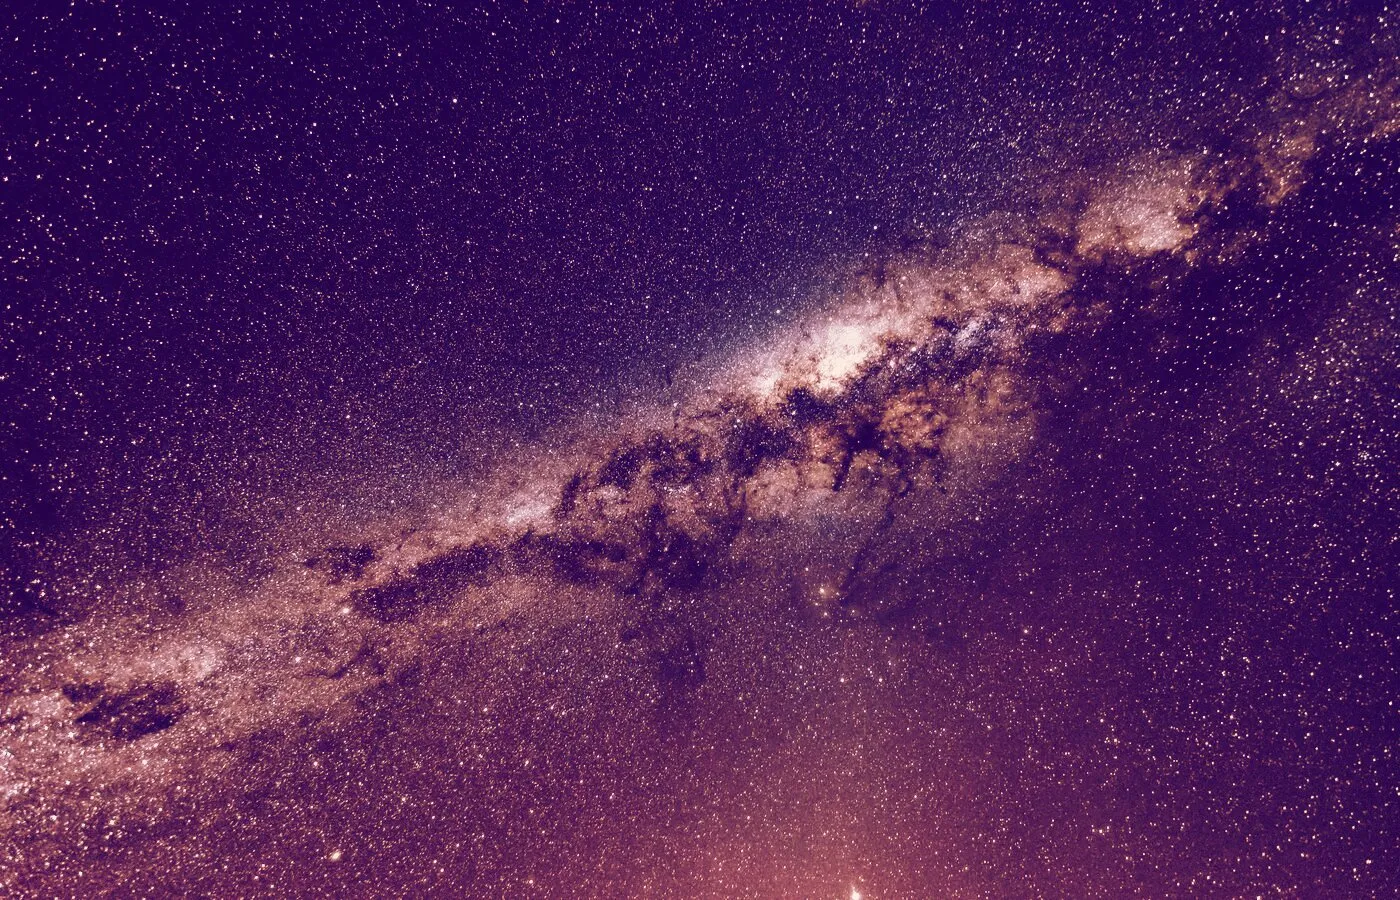 Galaxy. Photo credit: unsplash